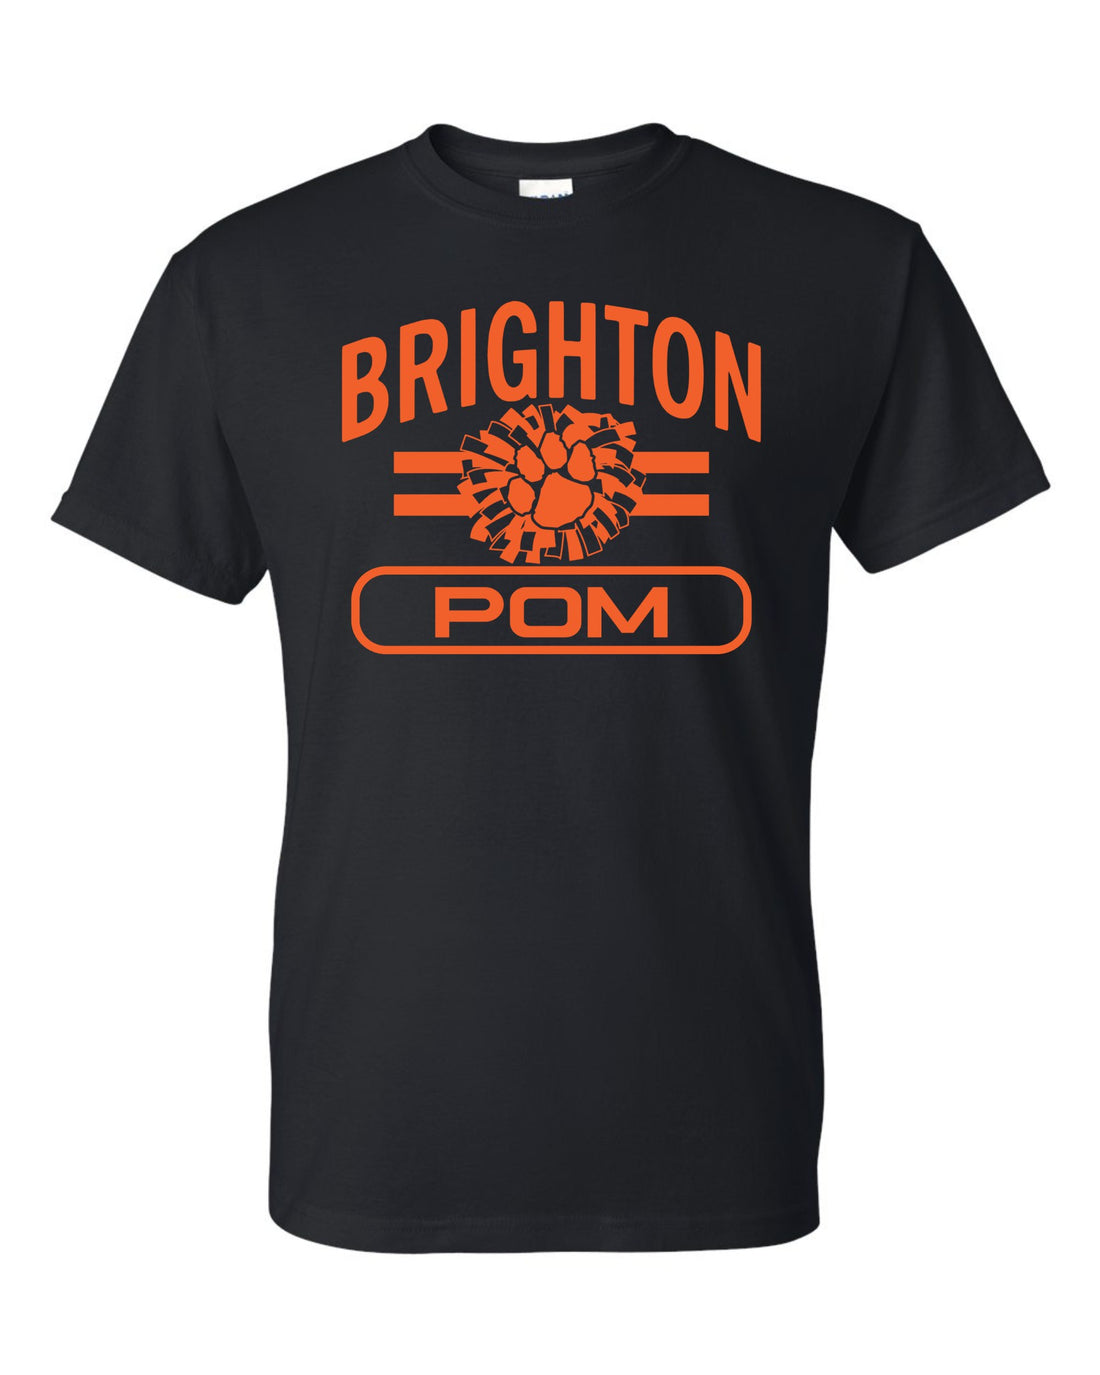 Brighton Pom Tee